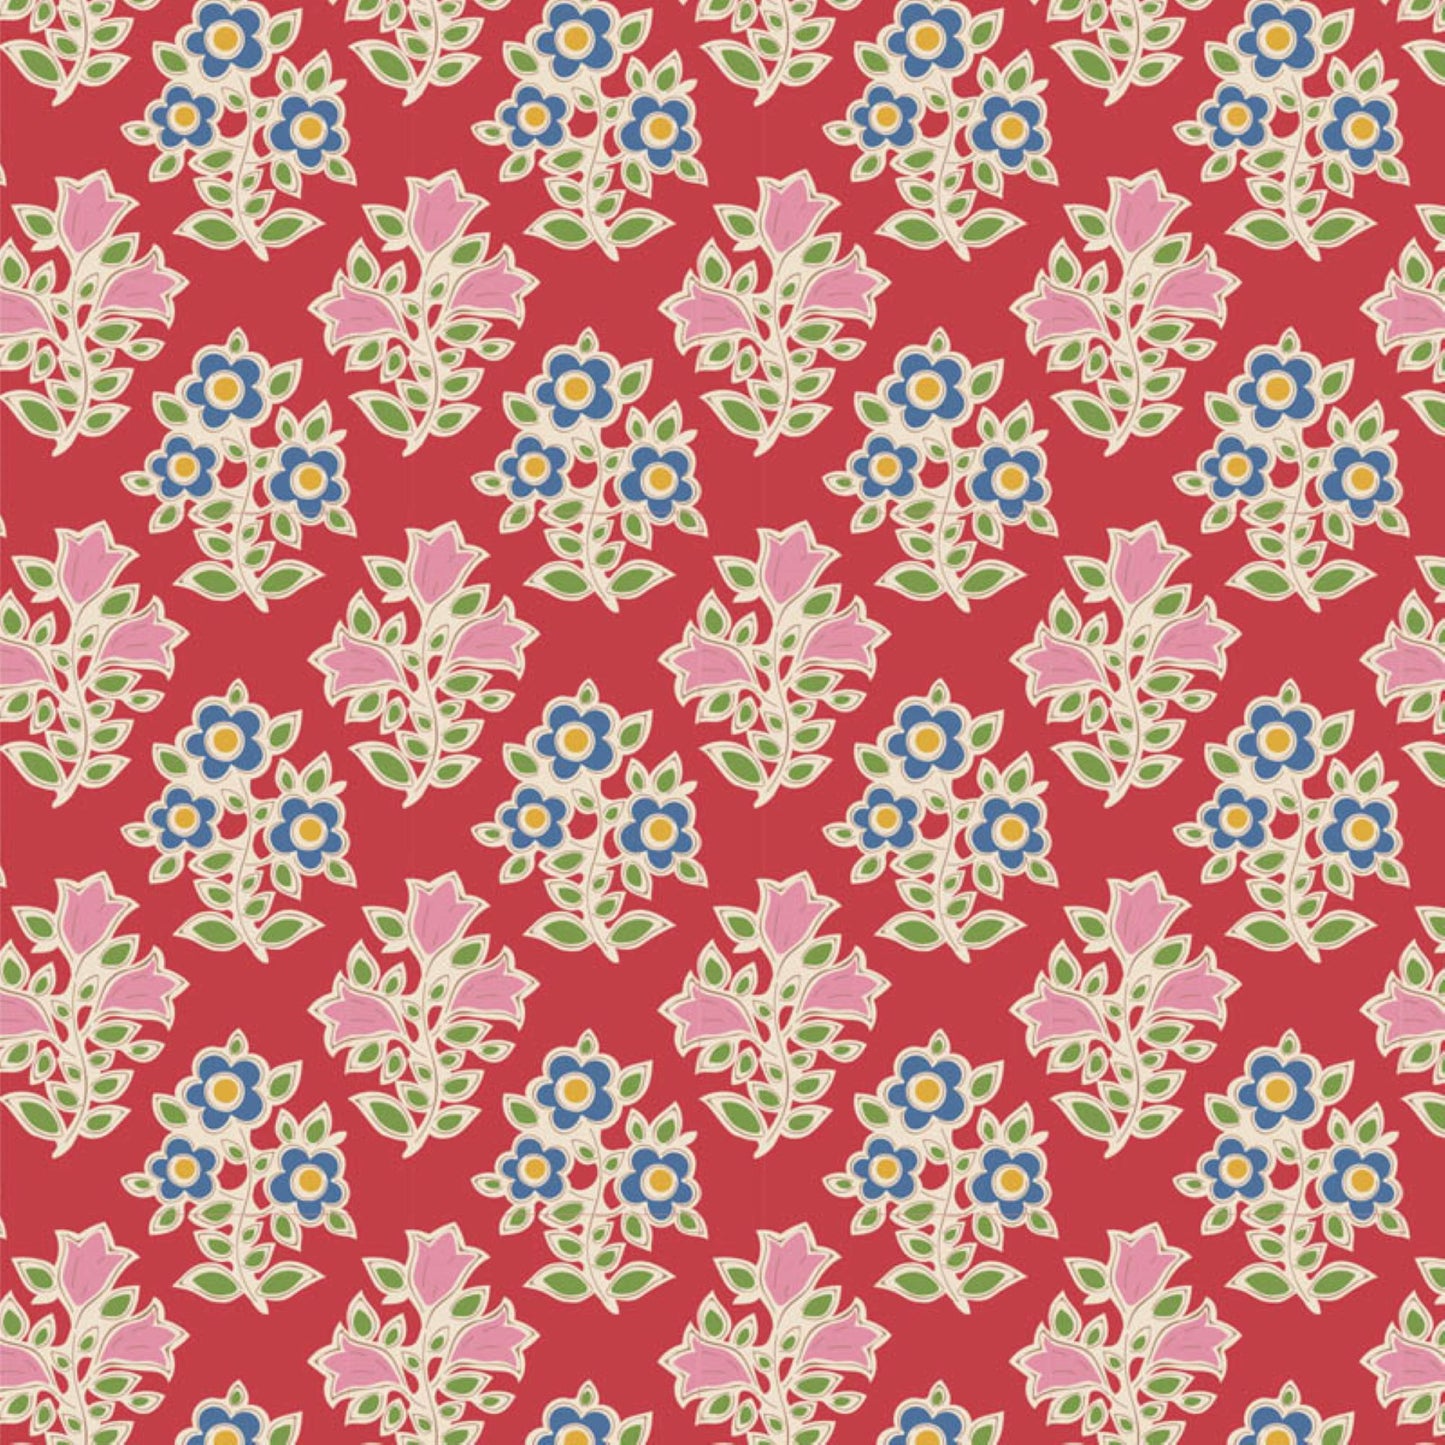 Tilda Jubilee and Flower Farm floral red bundle 7 Fat Quarters cotton quilt fabric